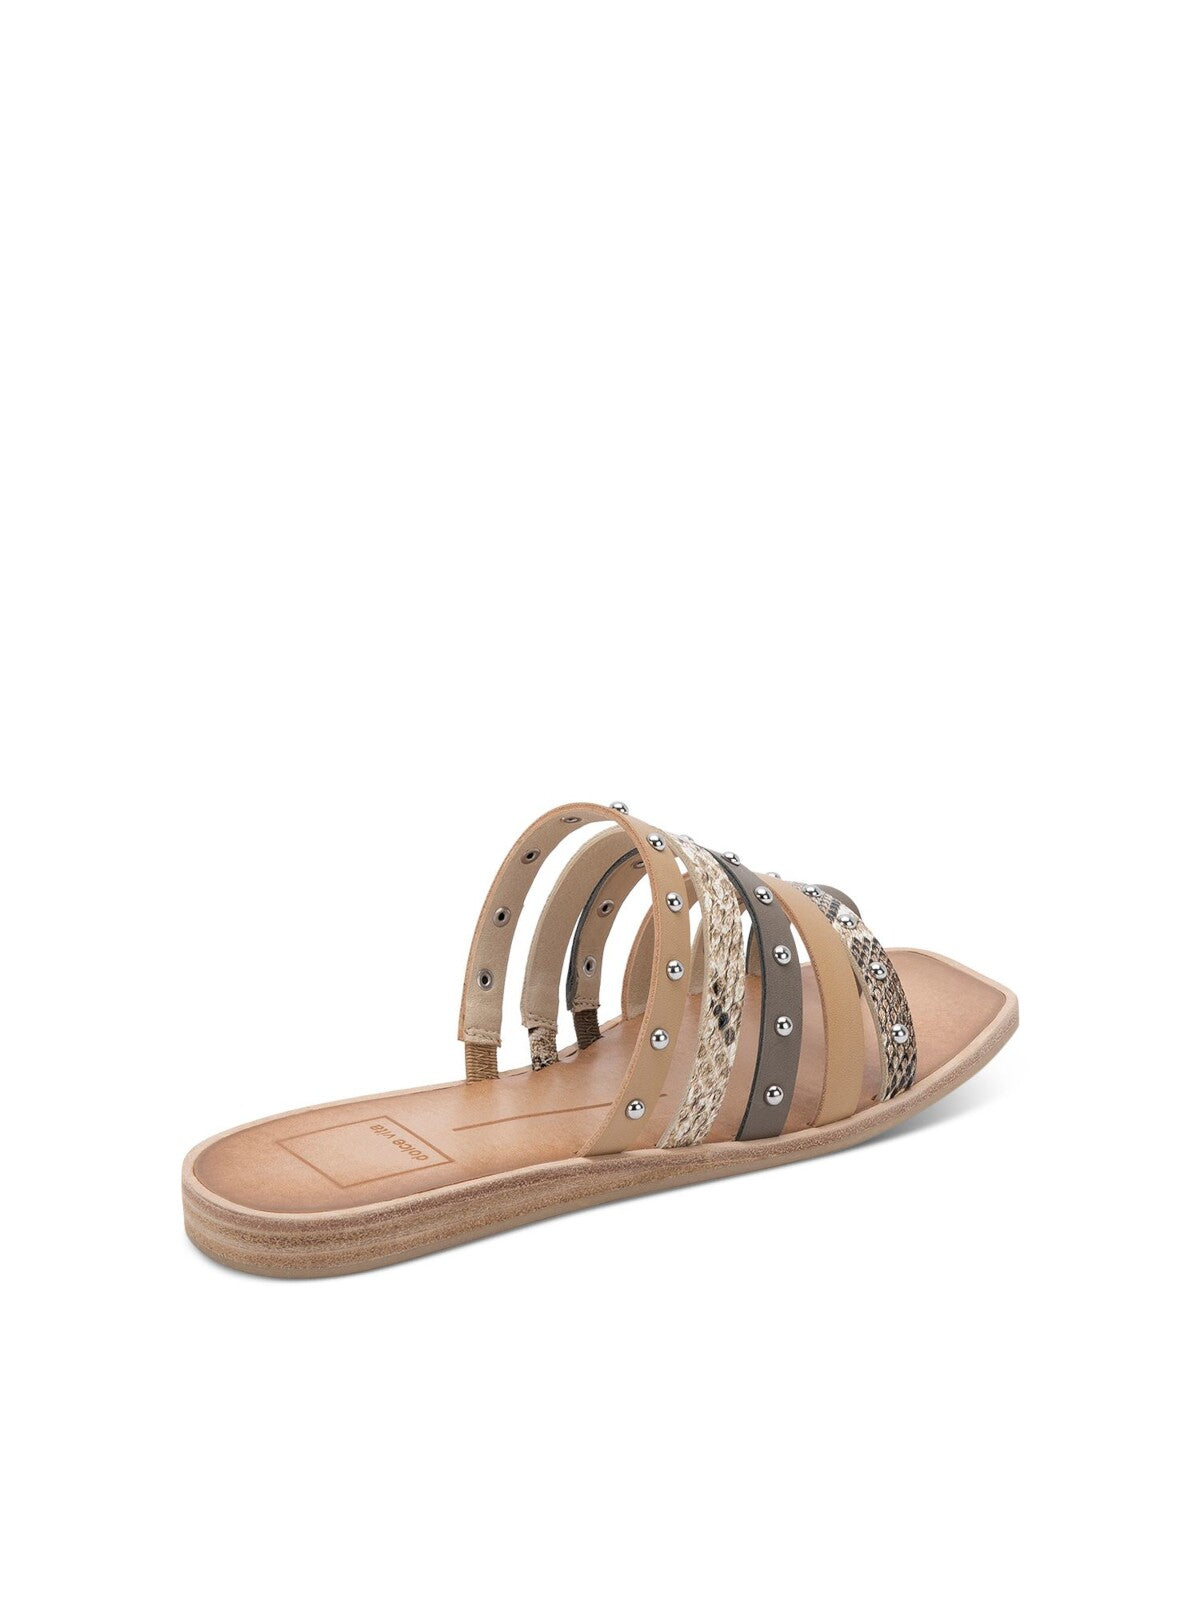 DOLCE VITA Womens Beige Snake Toe-Loop Strappy Studded Kaylee Square Toe Wedge Slip On Slide Sandals Shoes 6.5 M